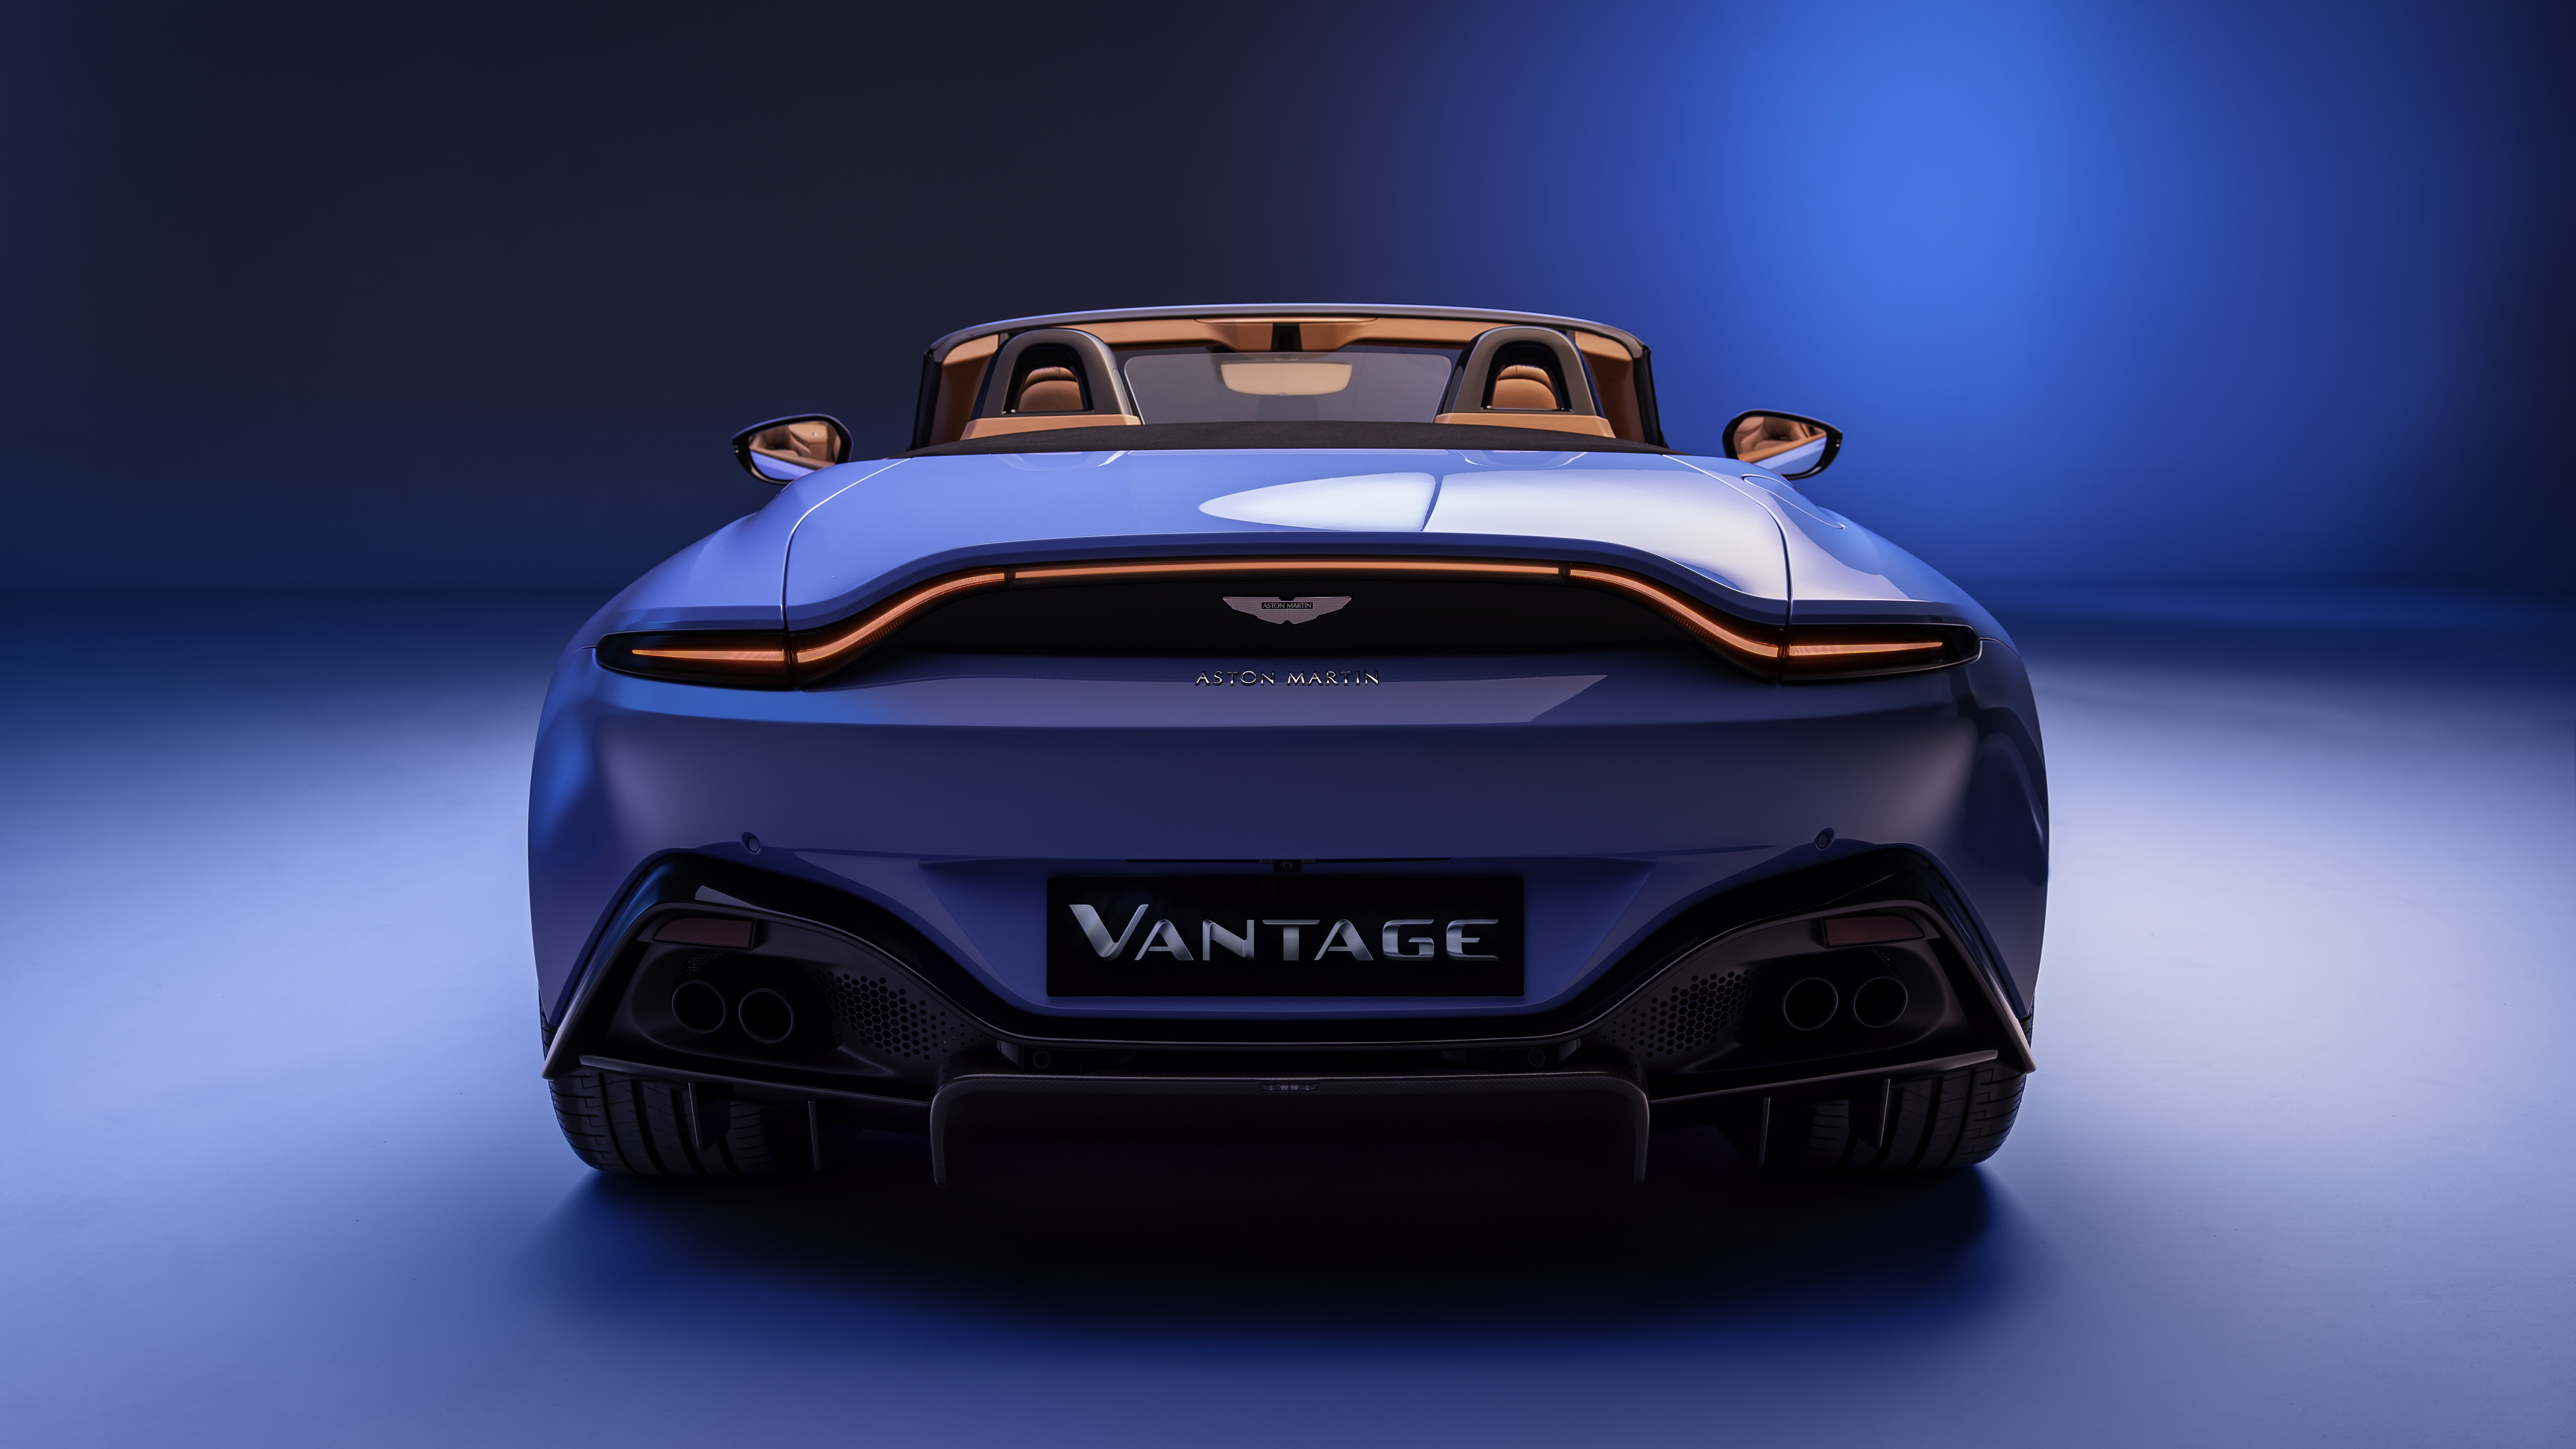 Aston Martin Vantage Roadster 2020 5k 3 Wallpaper Hd Car Wallpapers Id 14321